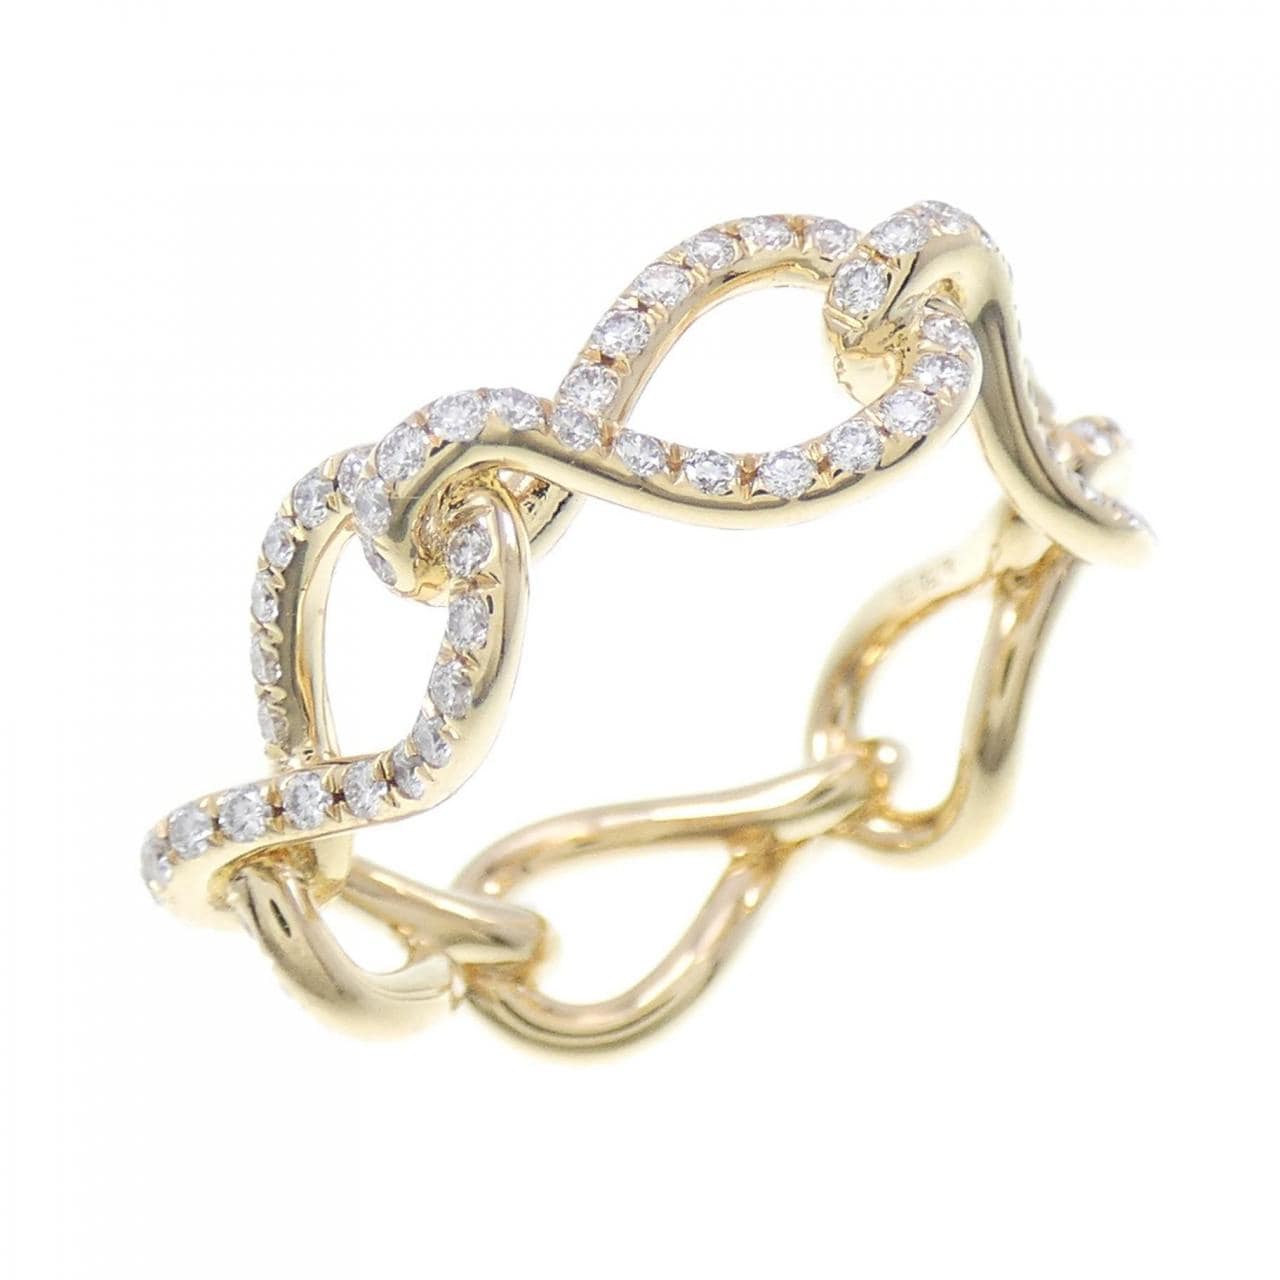 KOMEHYO|Cartier Diamond Ring|Cartier|Brand Jewelry|Rings|Others ...